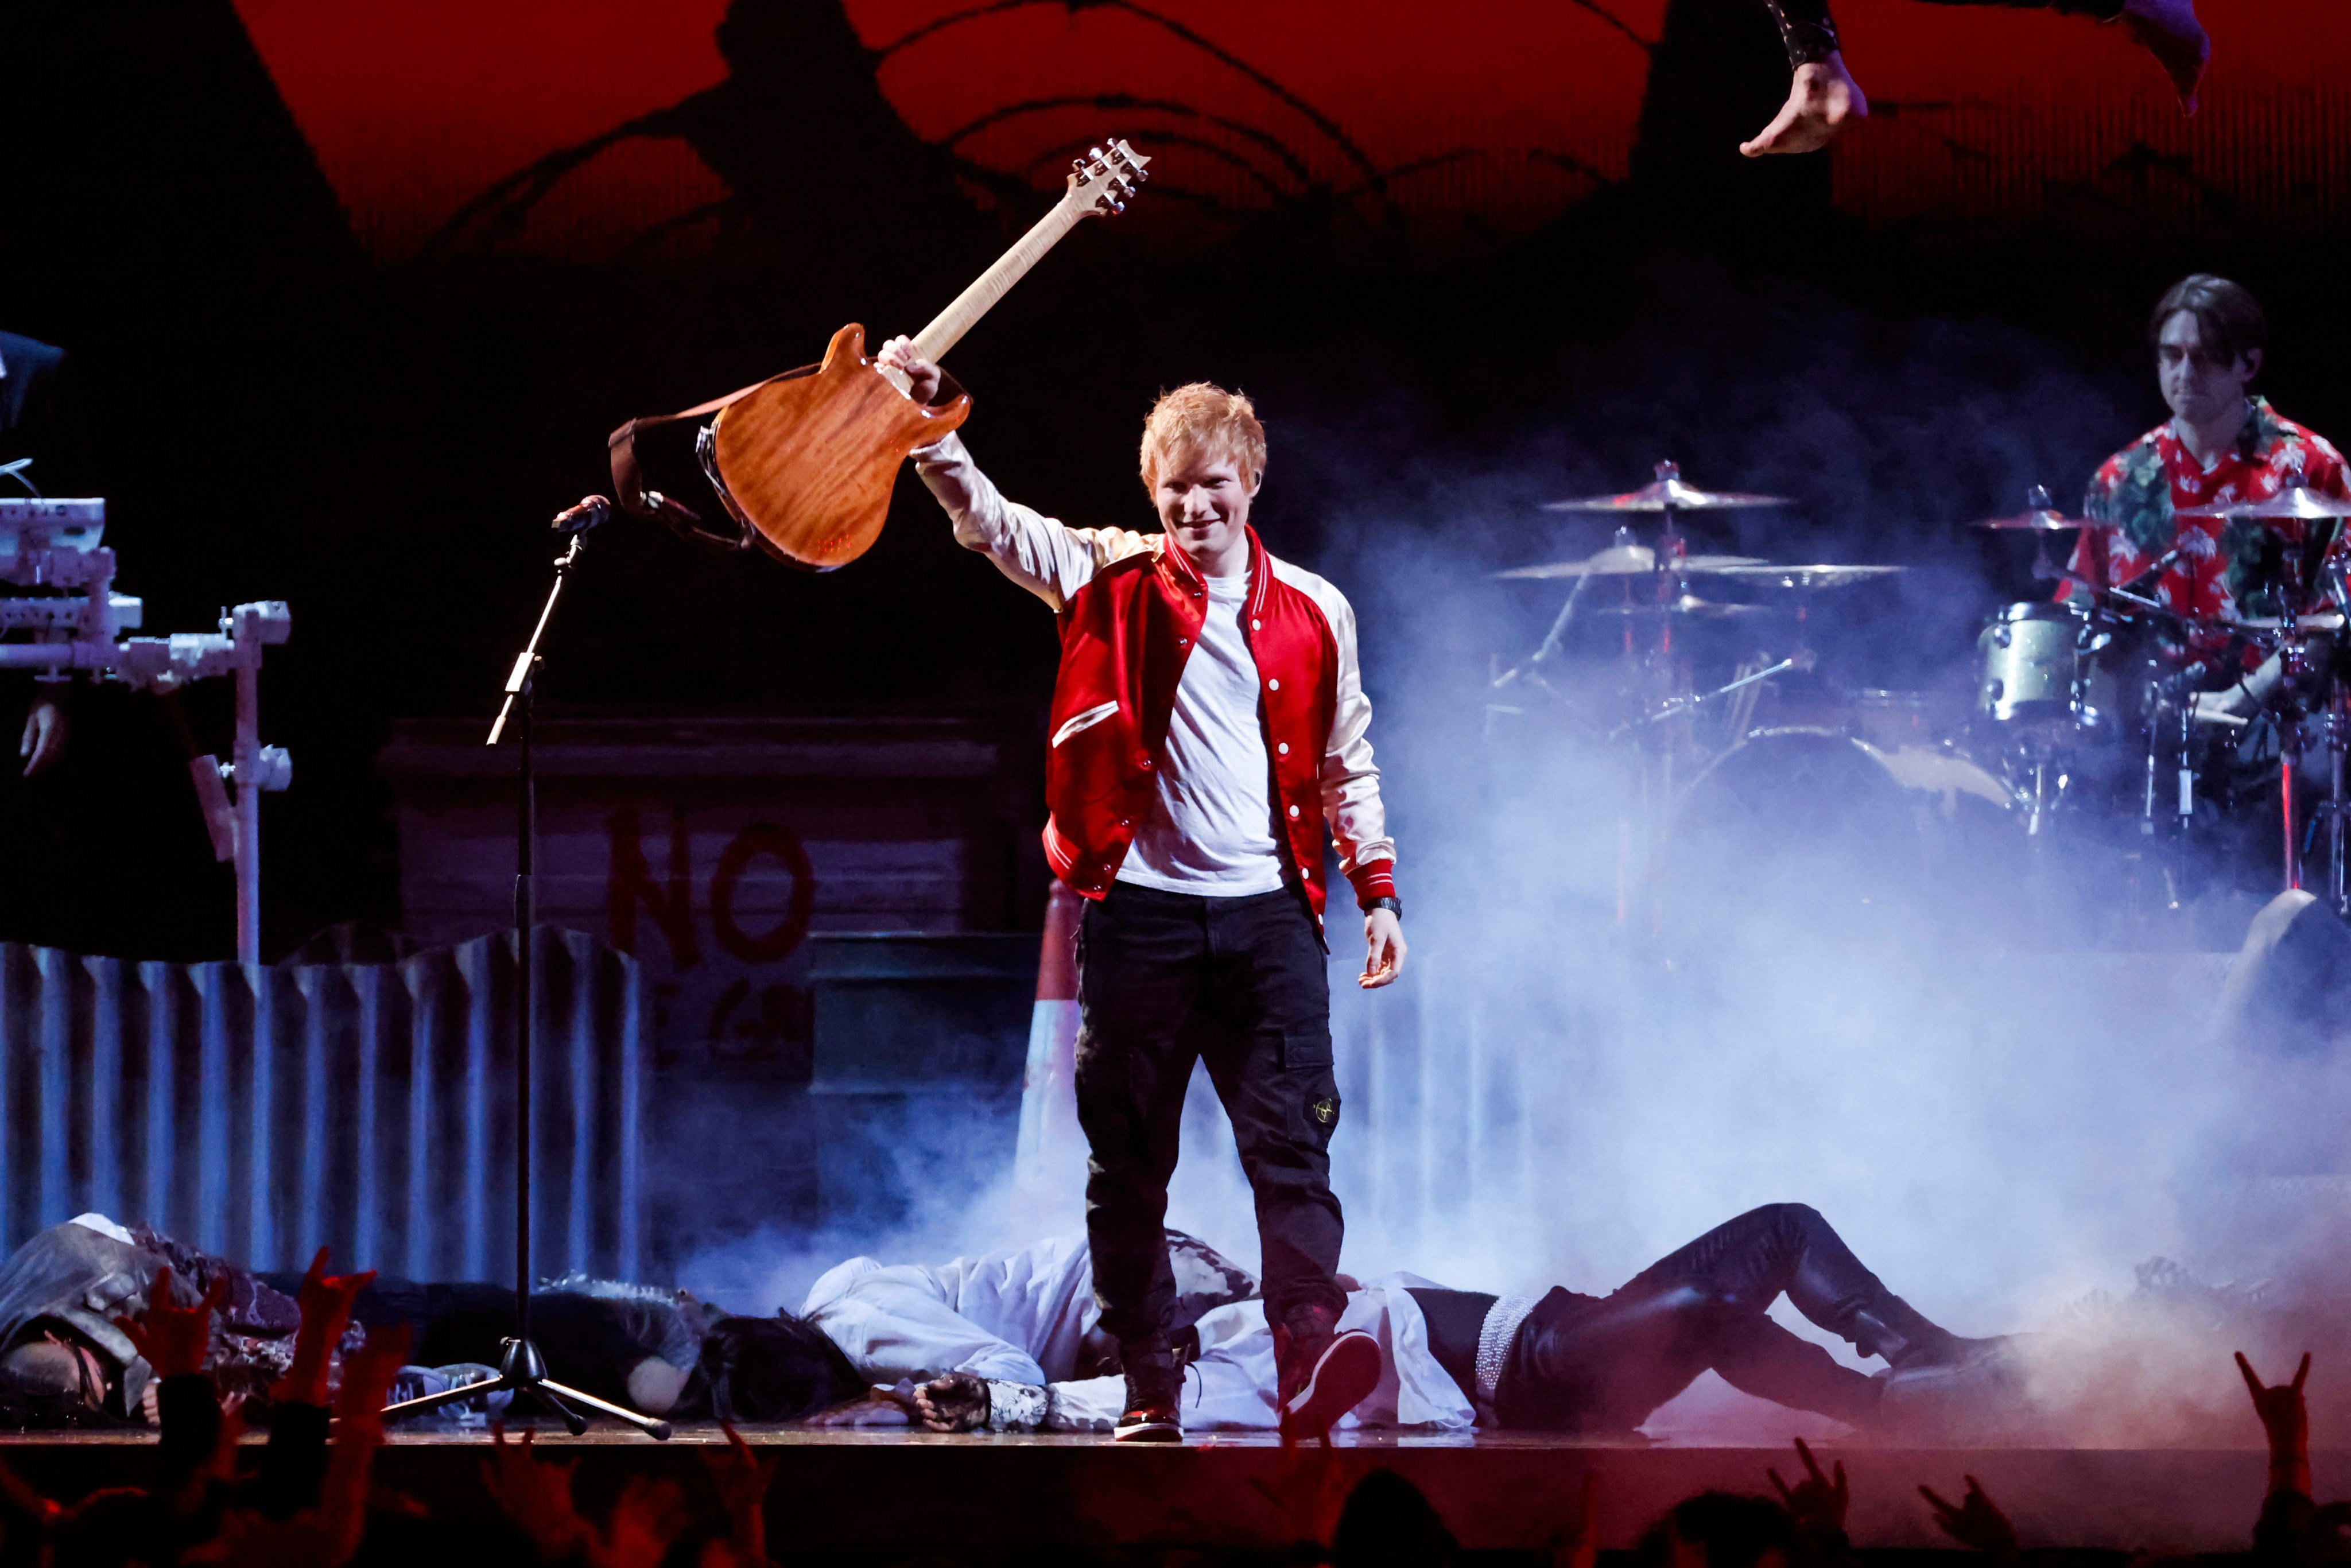 Singer Ed Sheeran performs during the BRIT Awards 2022 in London. Photo: AFP